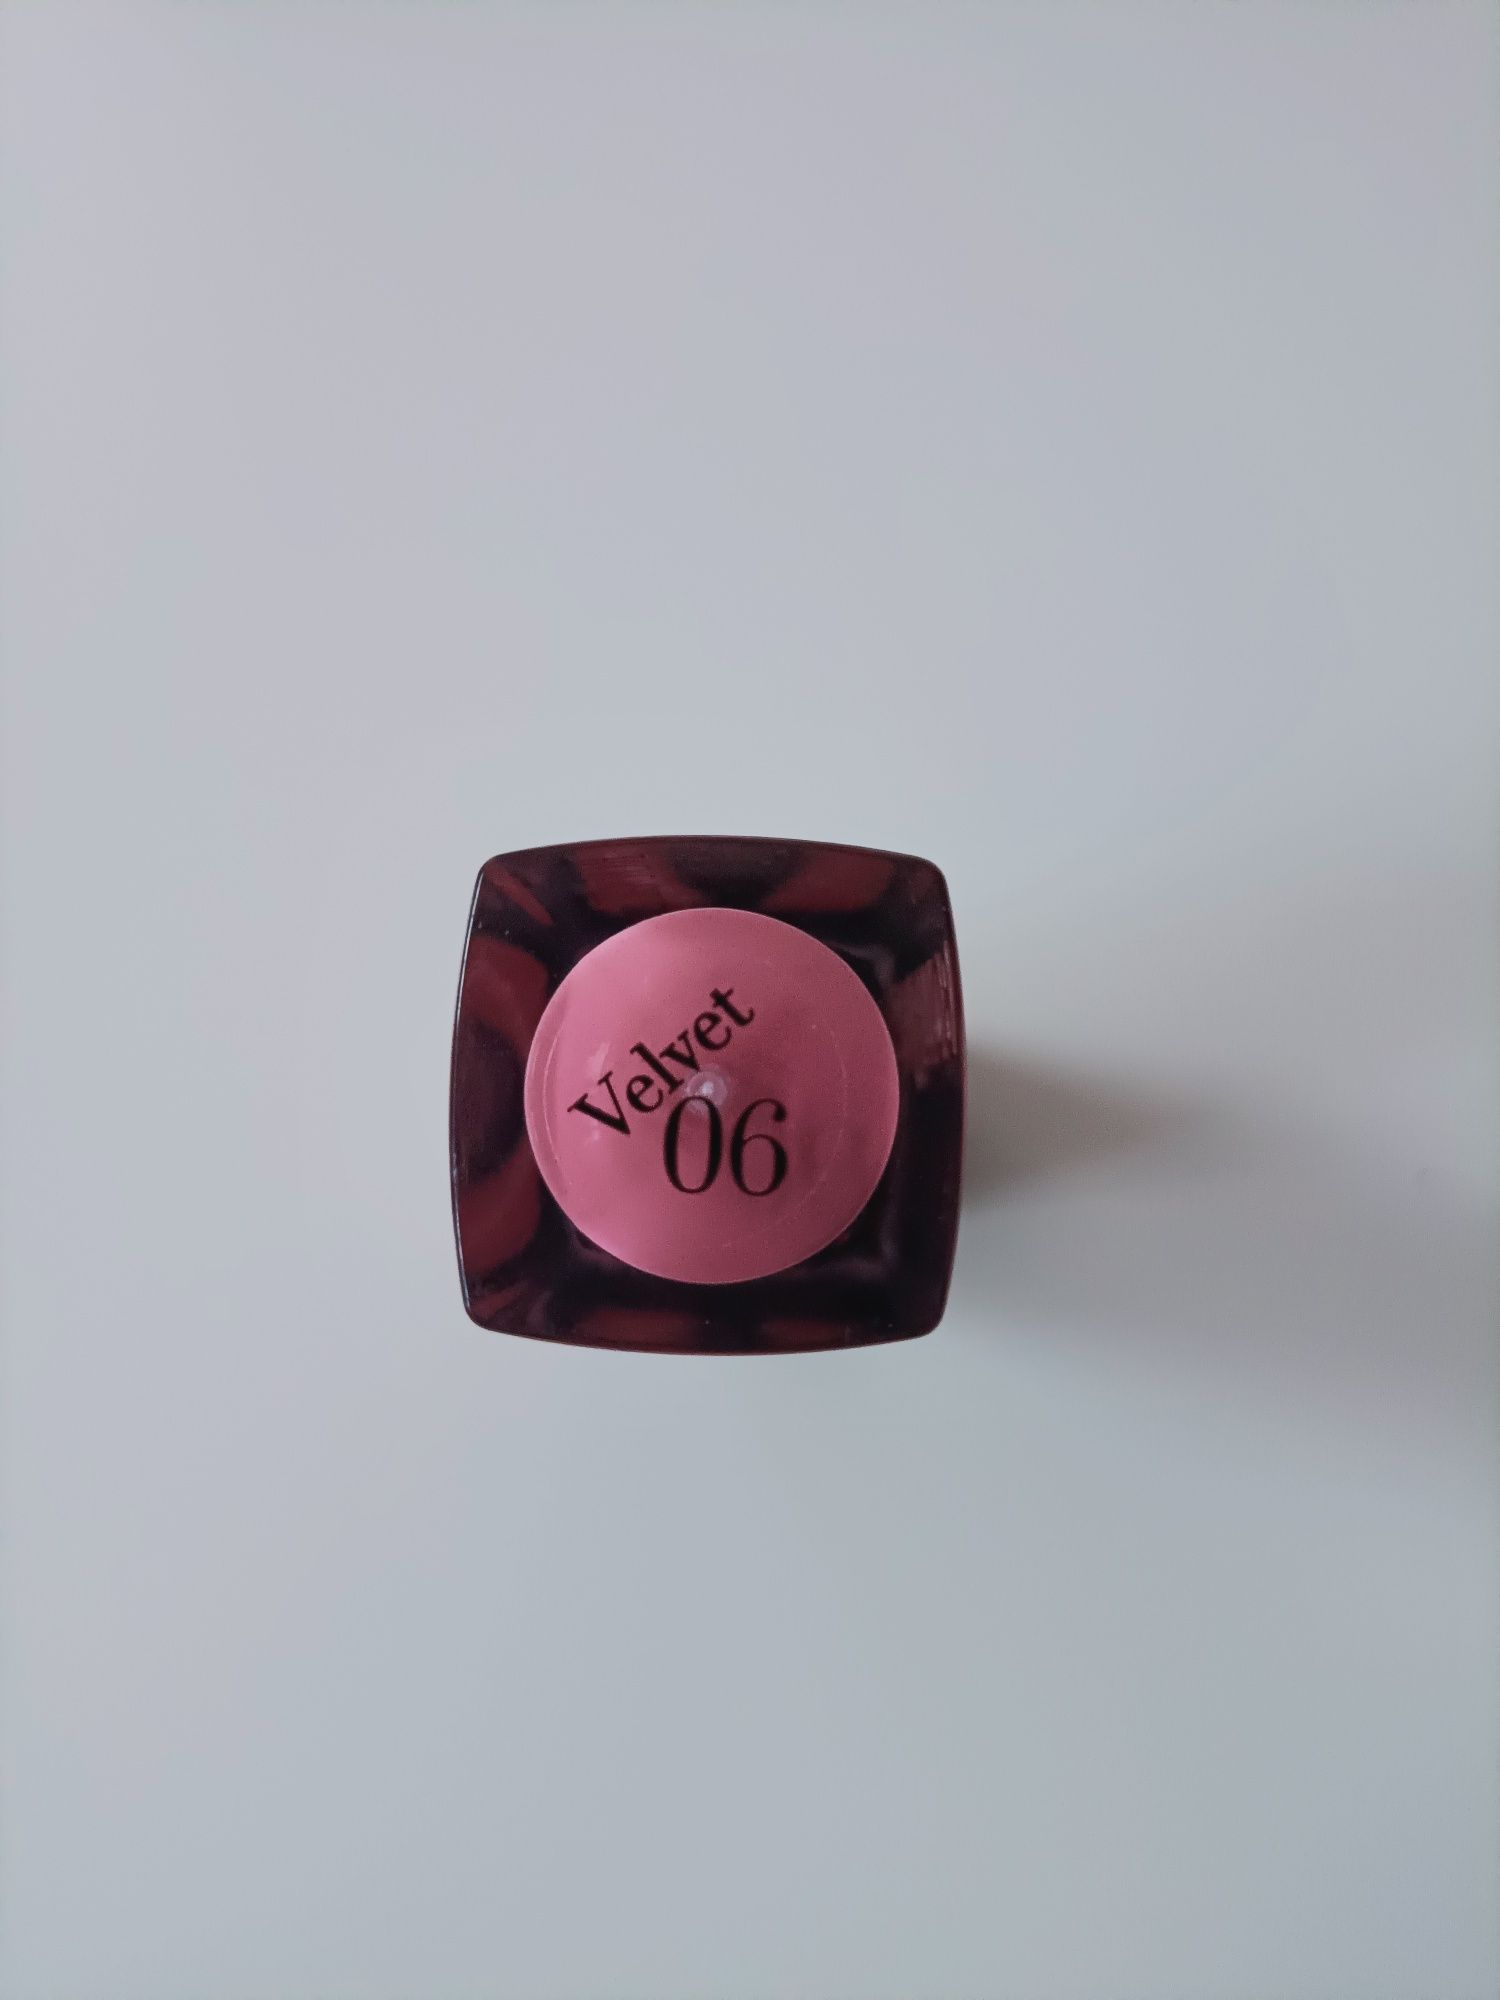 Nowa Rouge Edition Velvet Bourjois nr 06 Pink Pong